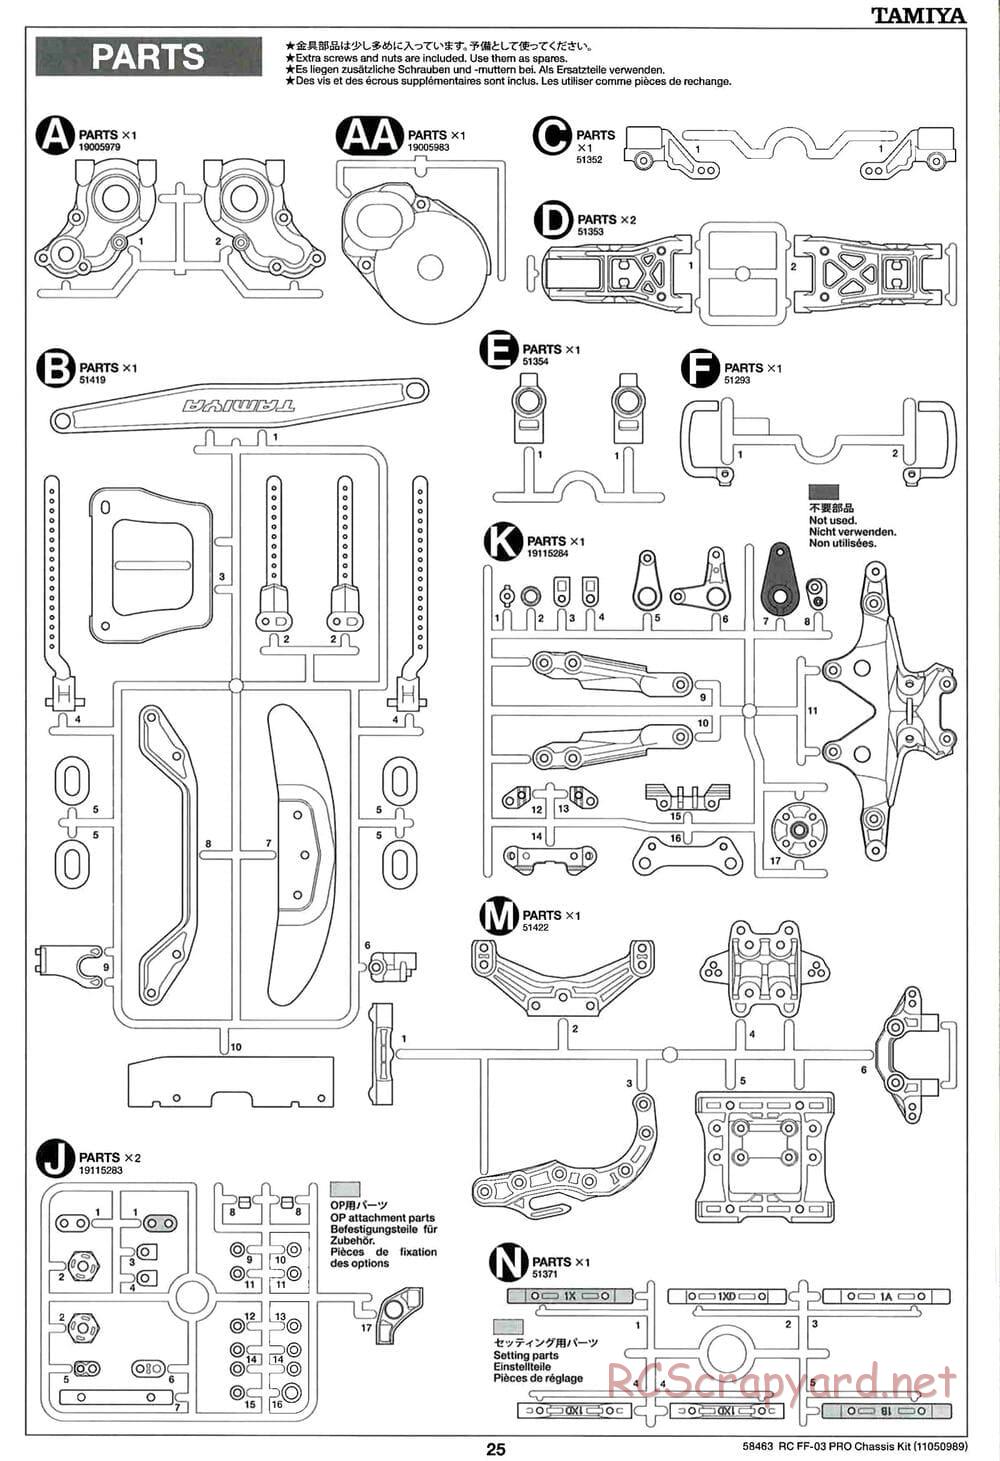 Tamiya - FF-03 Pro Chassis - Manual - Page 25